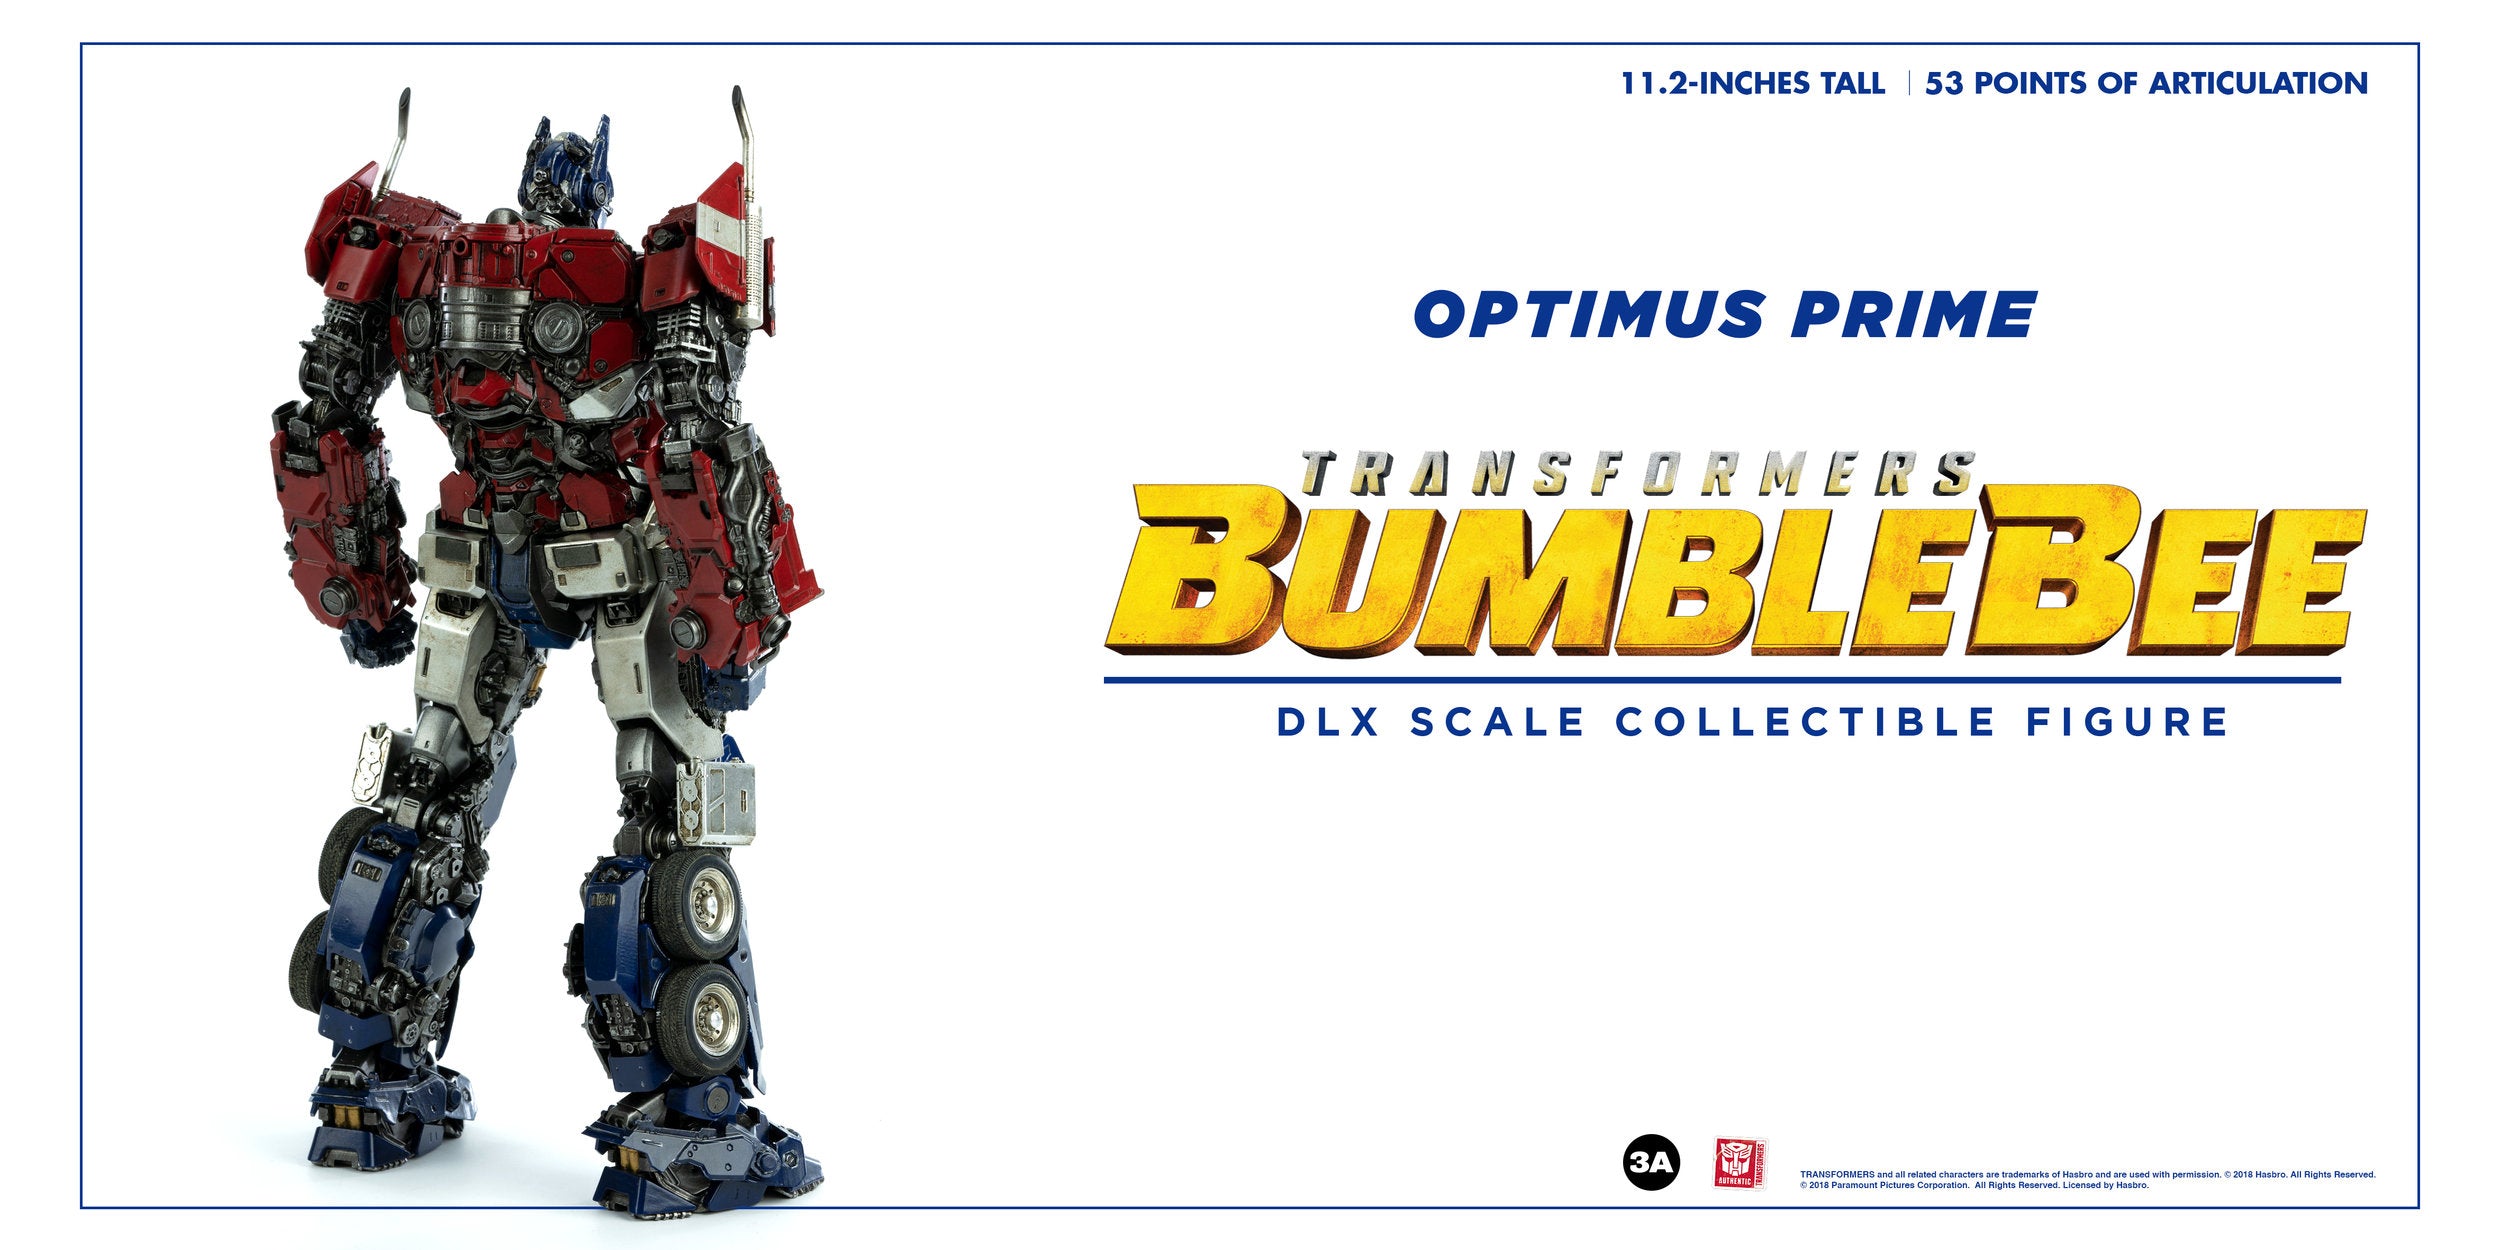 ThreeA - DLX Scale Collectible Series - Transformers: Bumblebee - Optimus Prime - Marvelous Toys